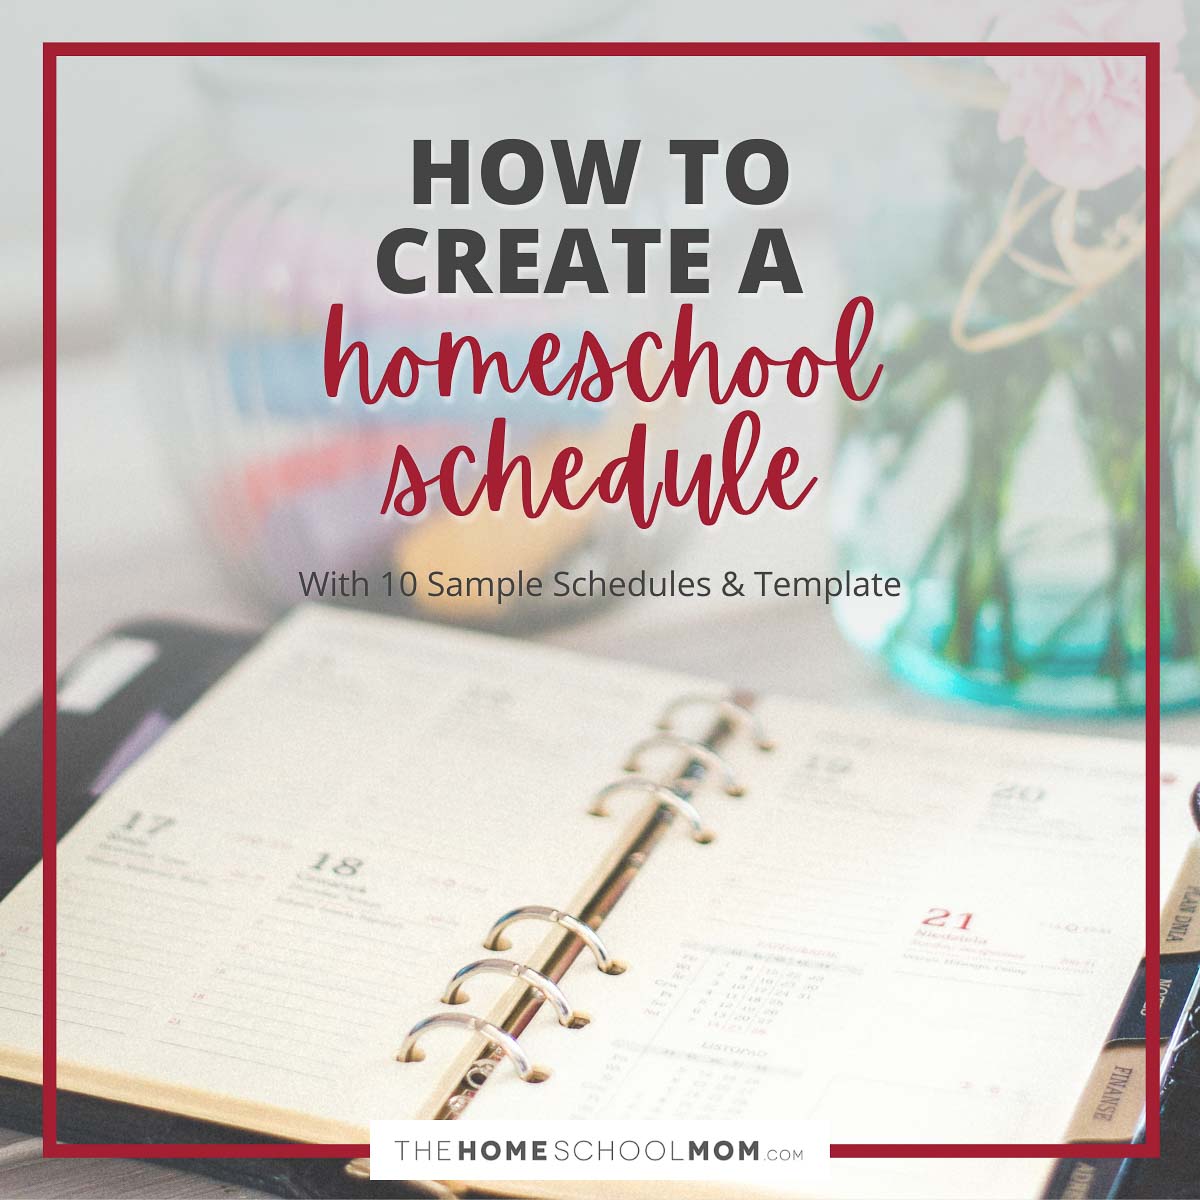 How to Create a Homeschool Schedule